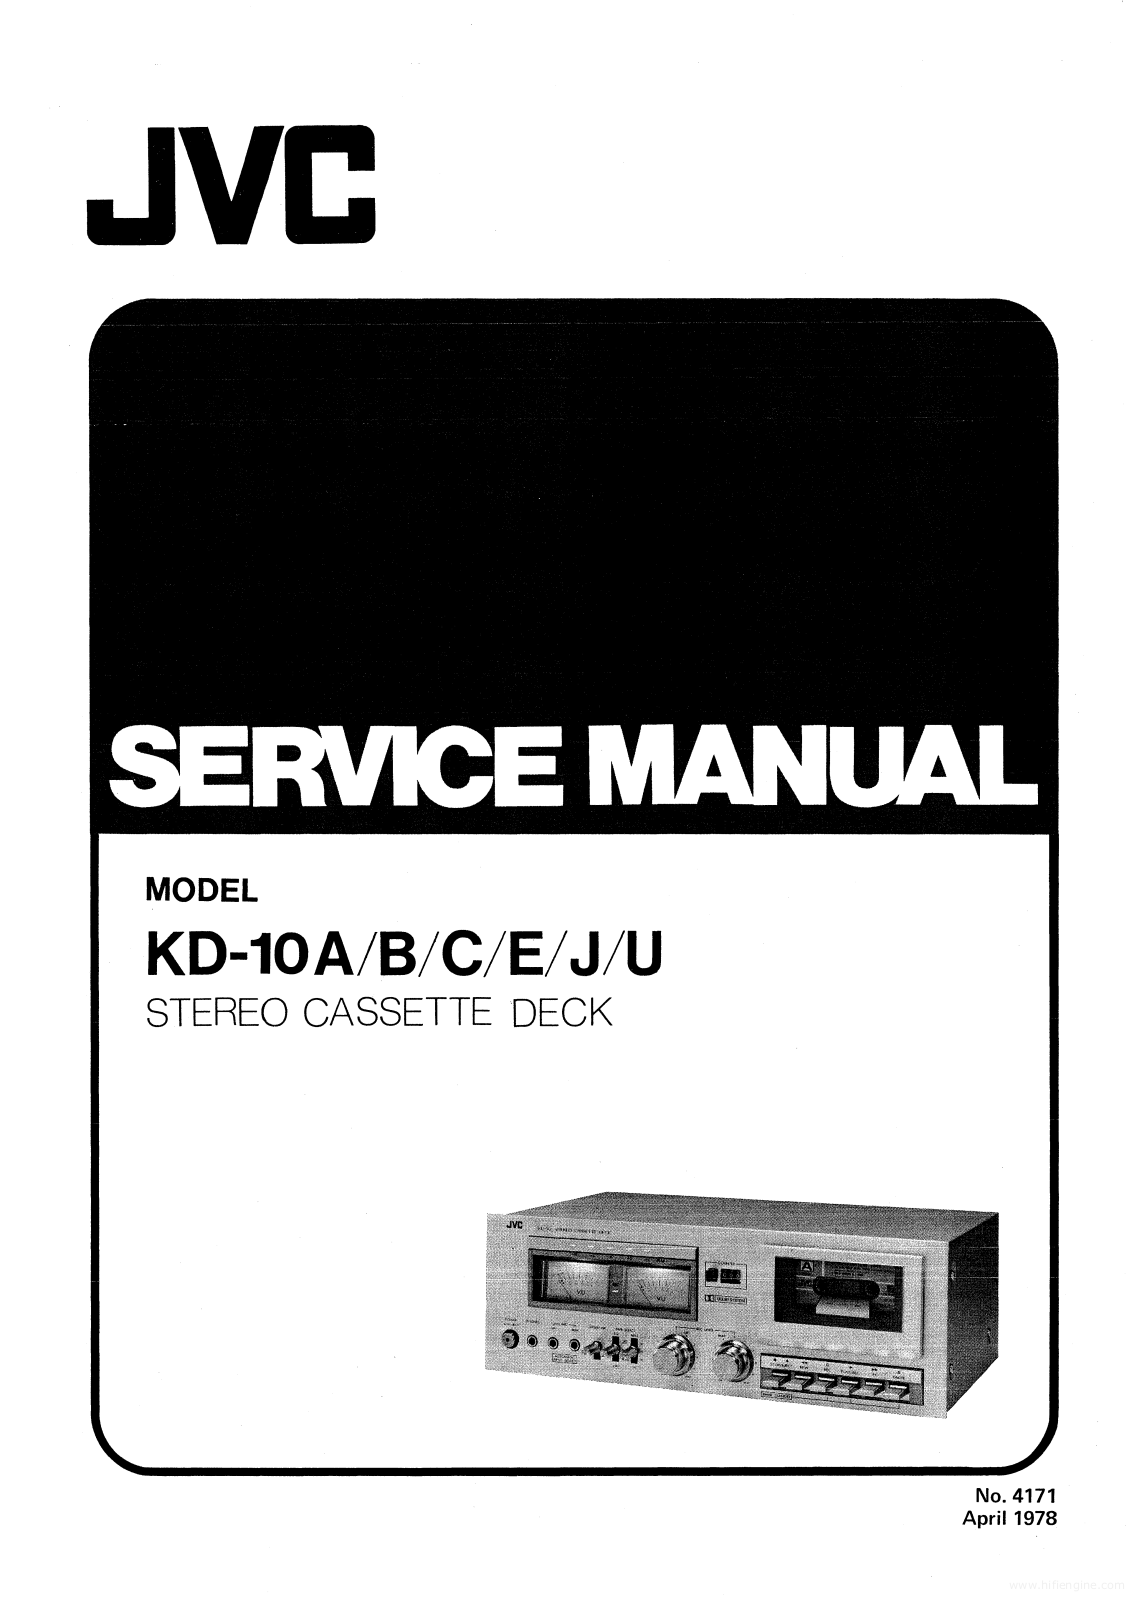 JVC KD-10 Service Manual